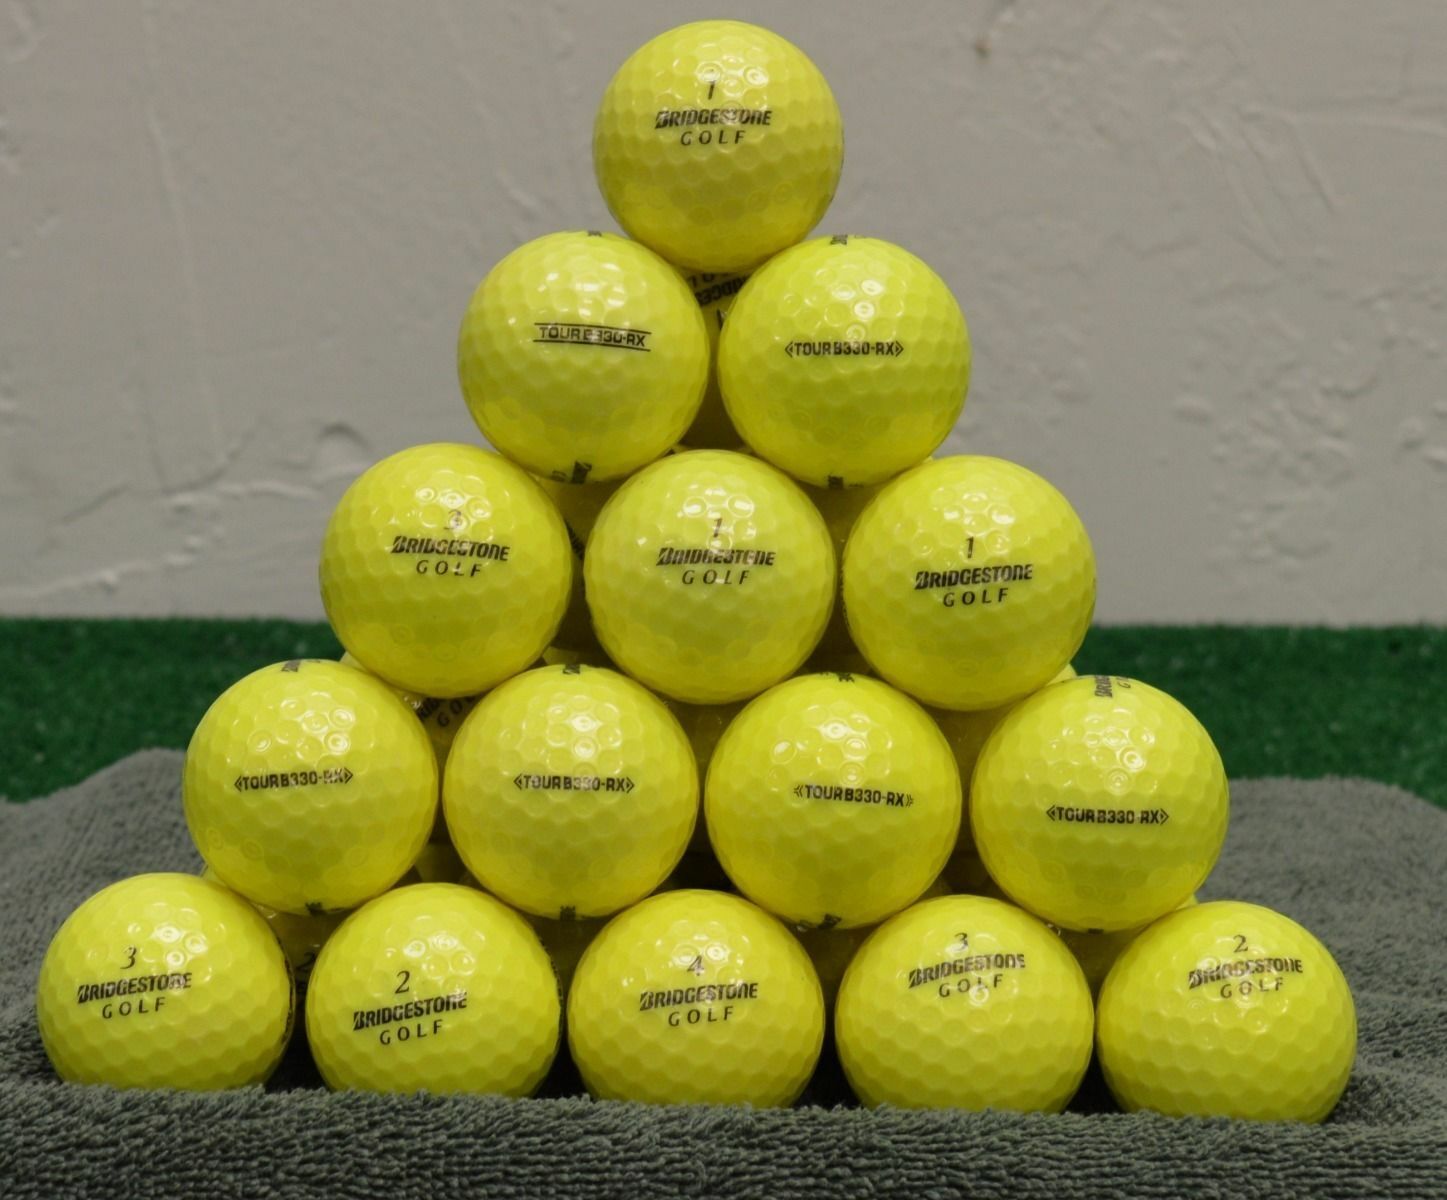 60 Bridgestone B330RX 5A Yellow Golf Balls